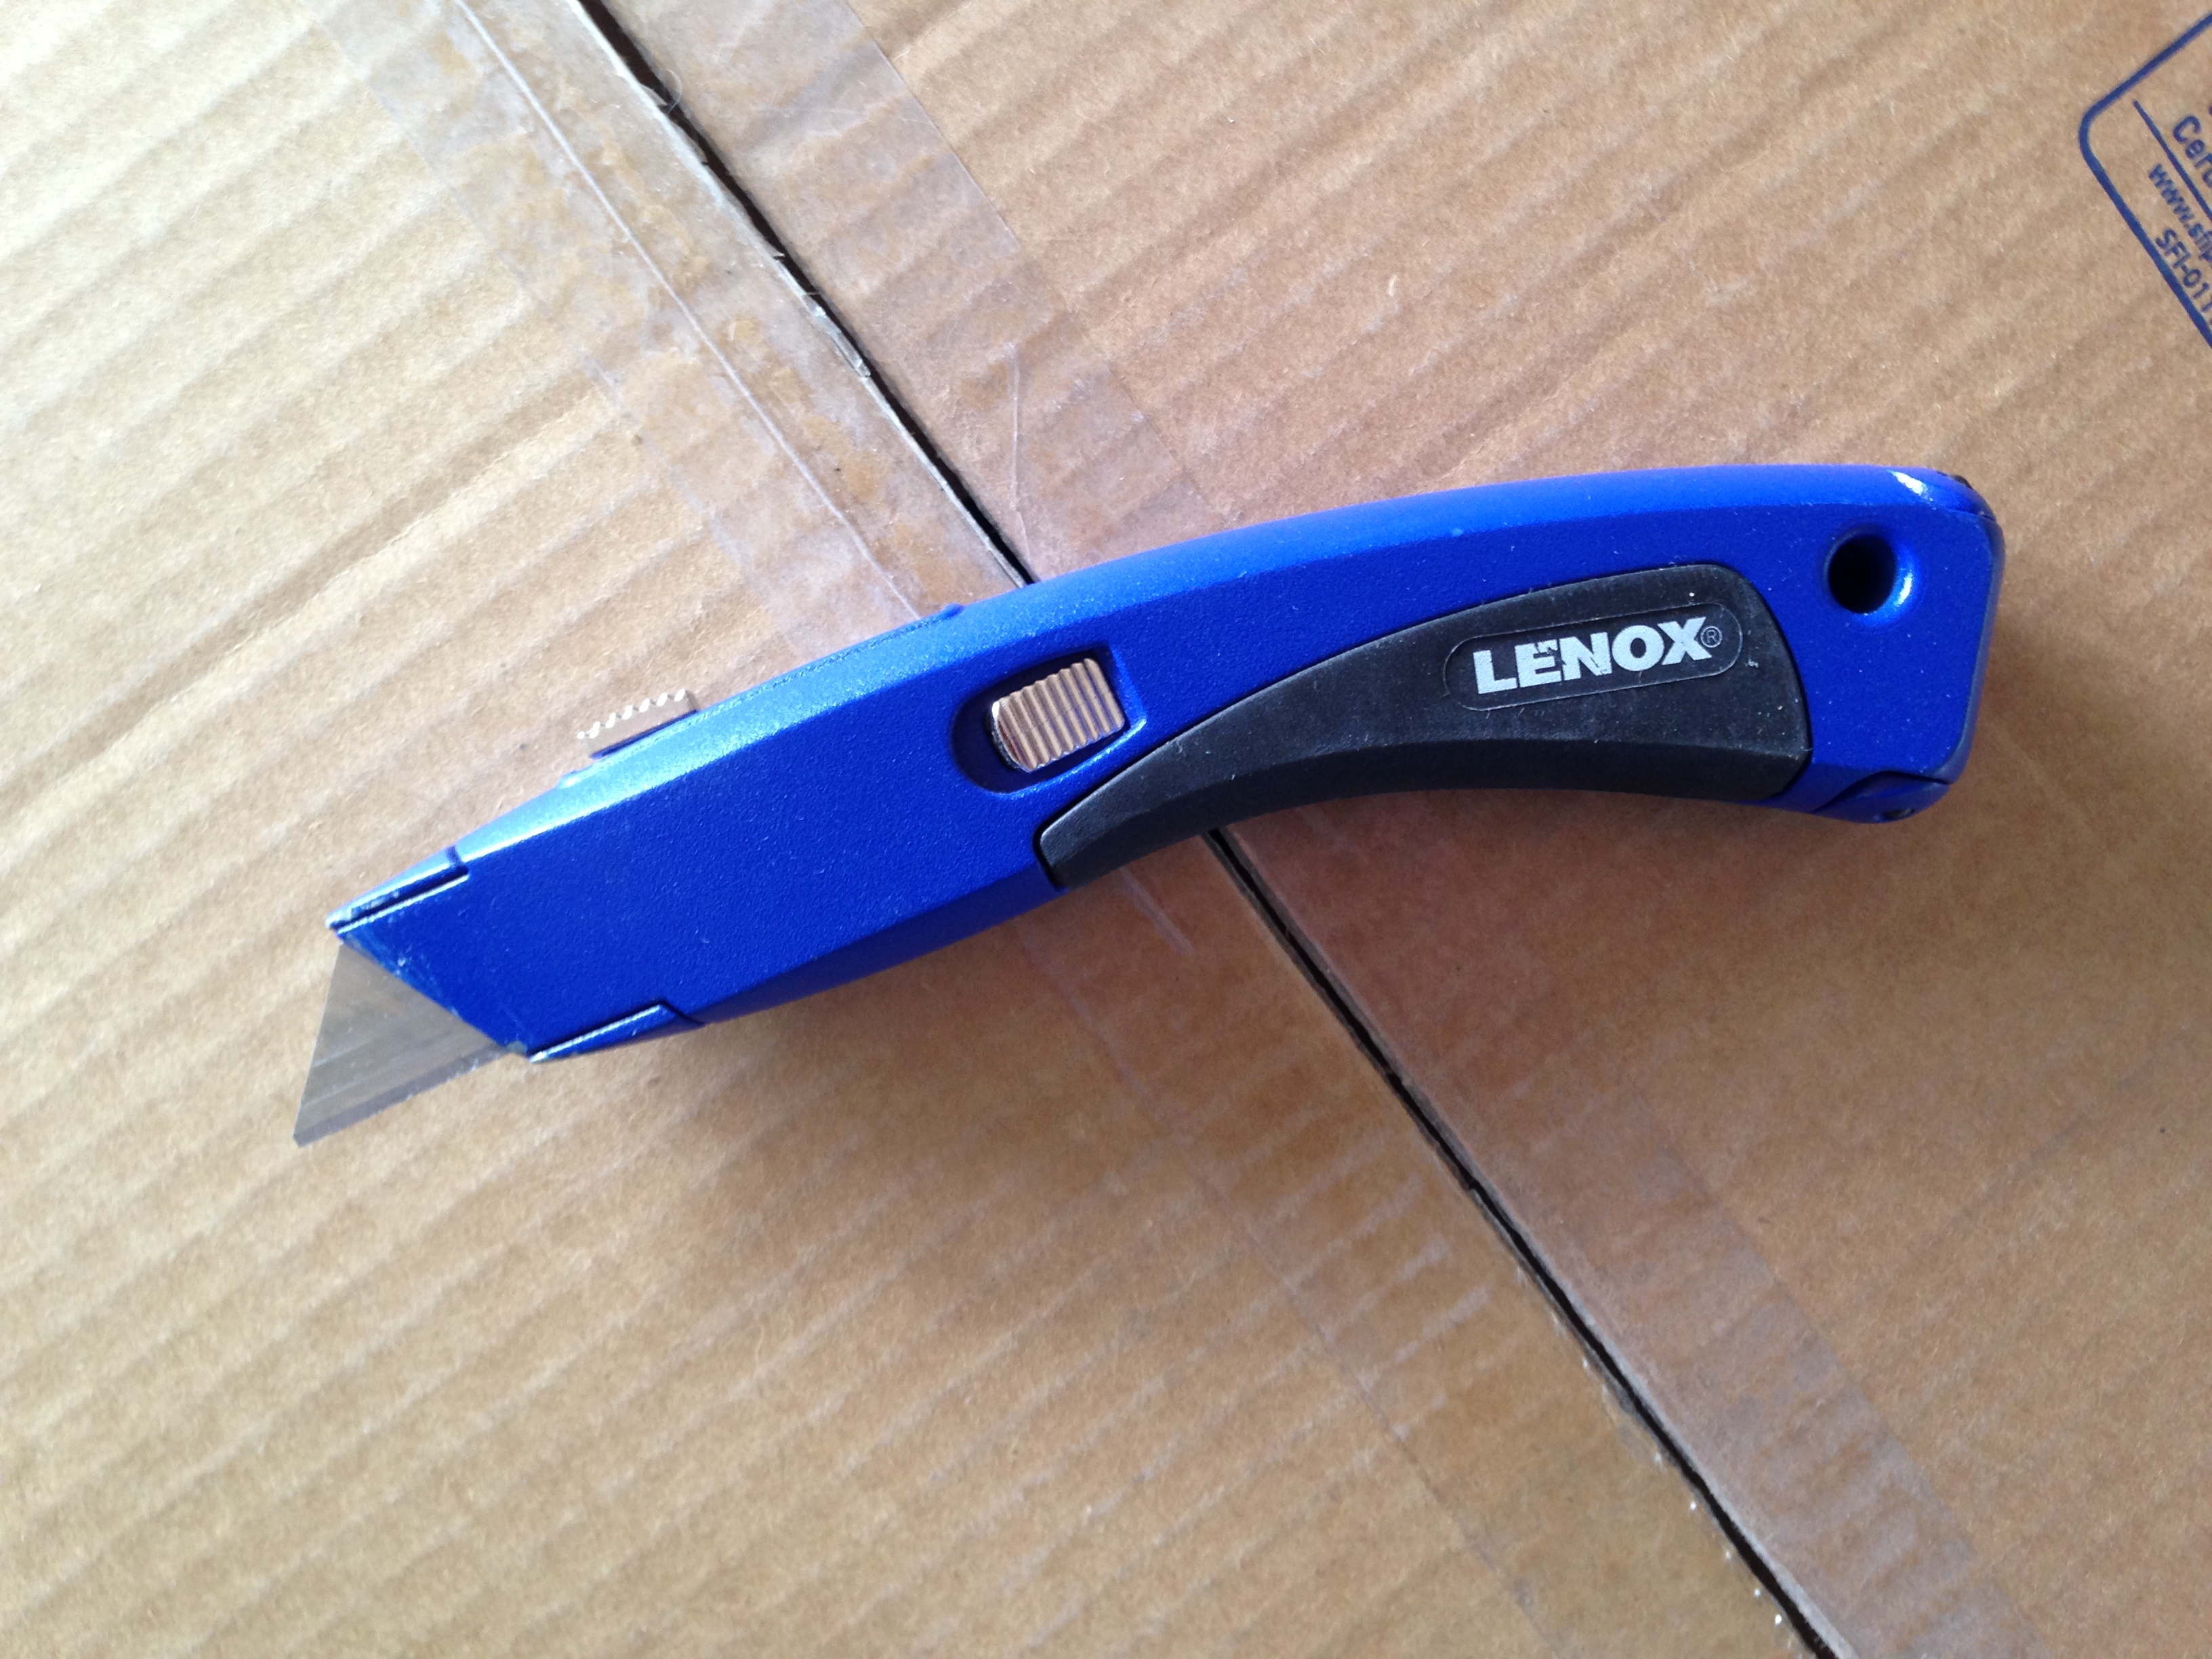 File:Lenox utility knife.jpg - Wikimedia Commons